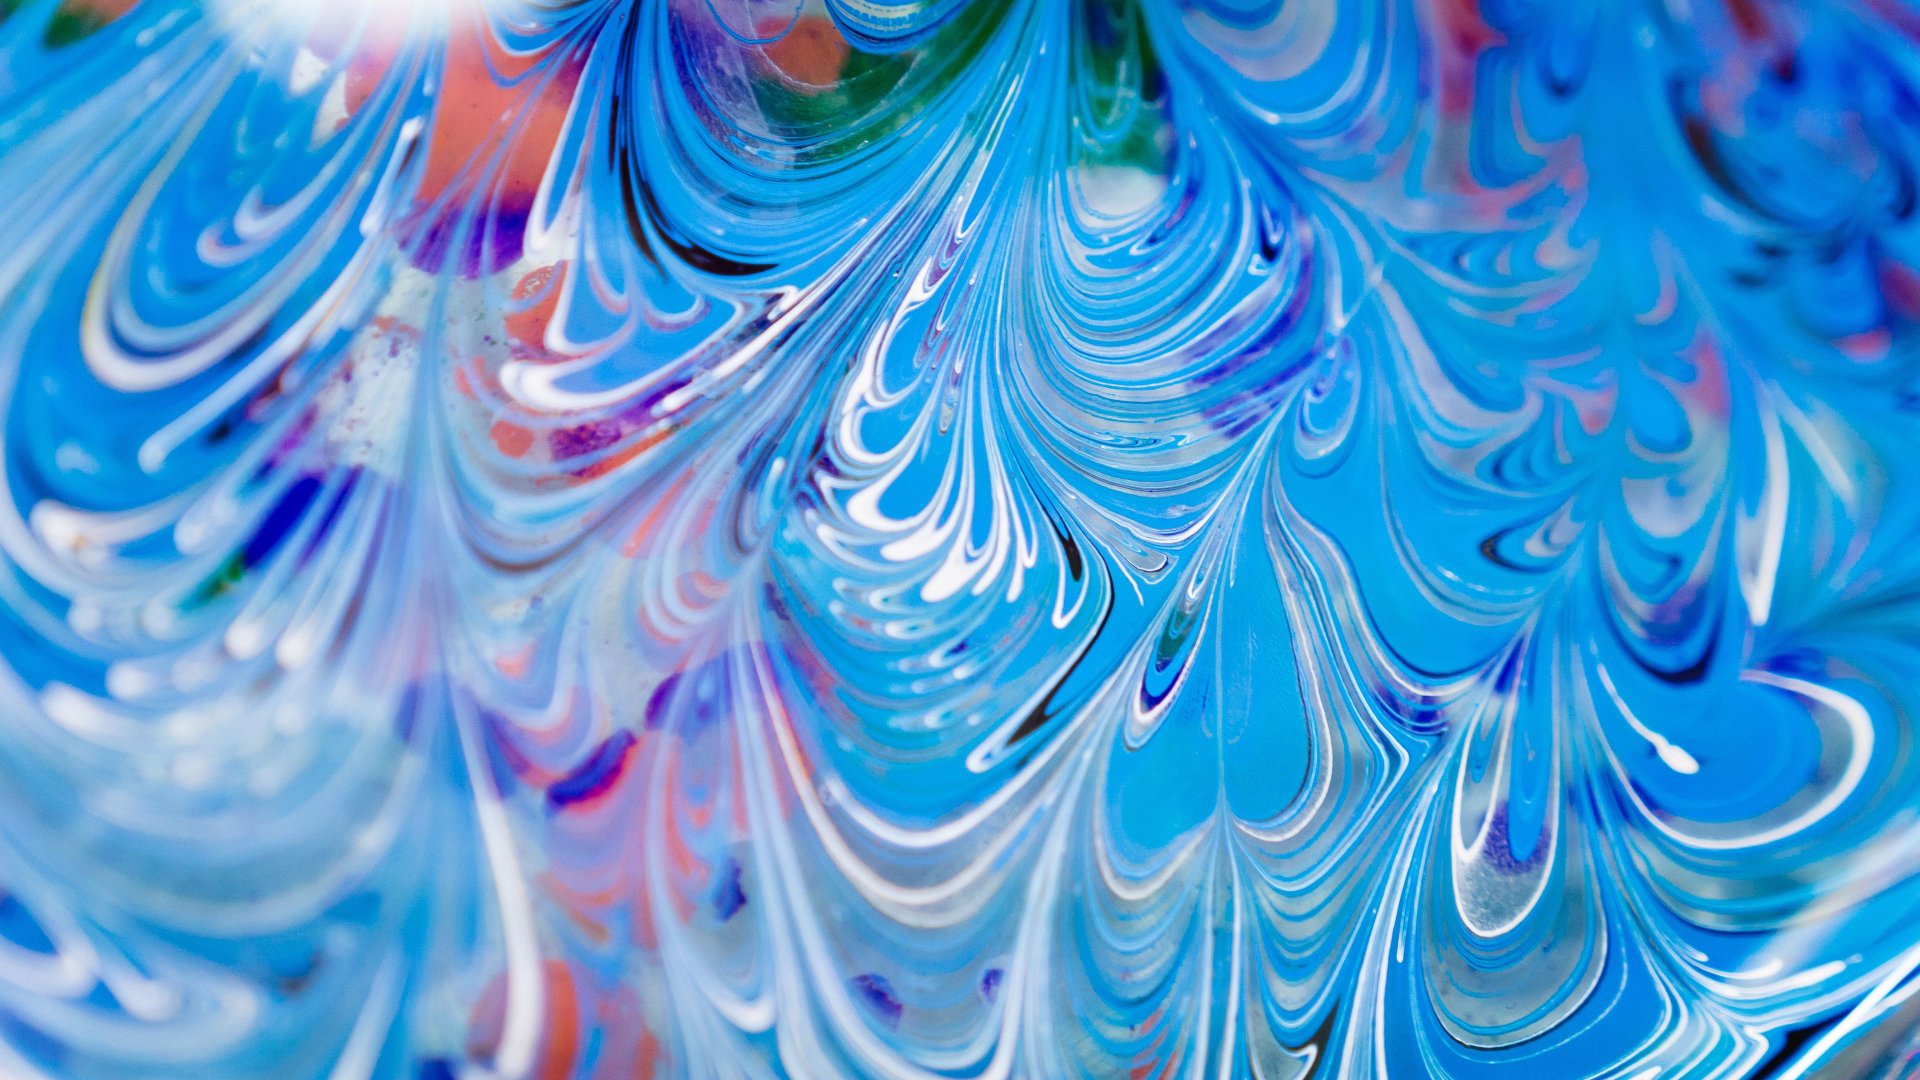 Blue 4k Ultra HD Wallpaper | Background Image | 3840x2160 - Wallpaper Abyss